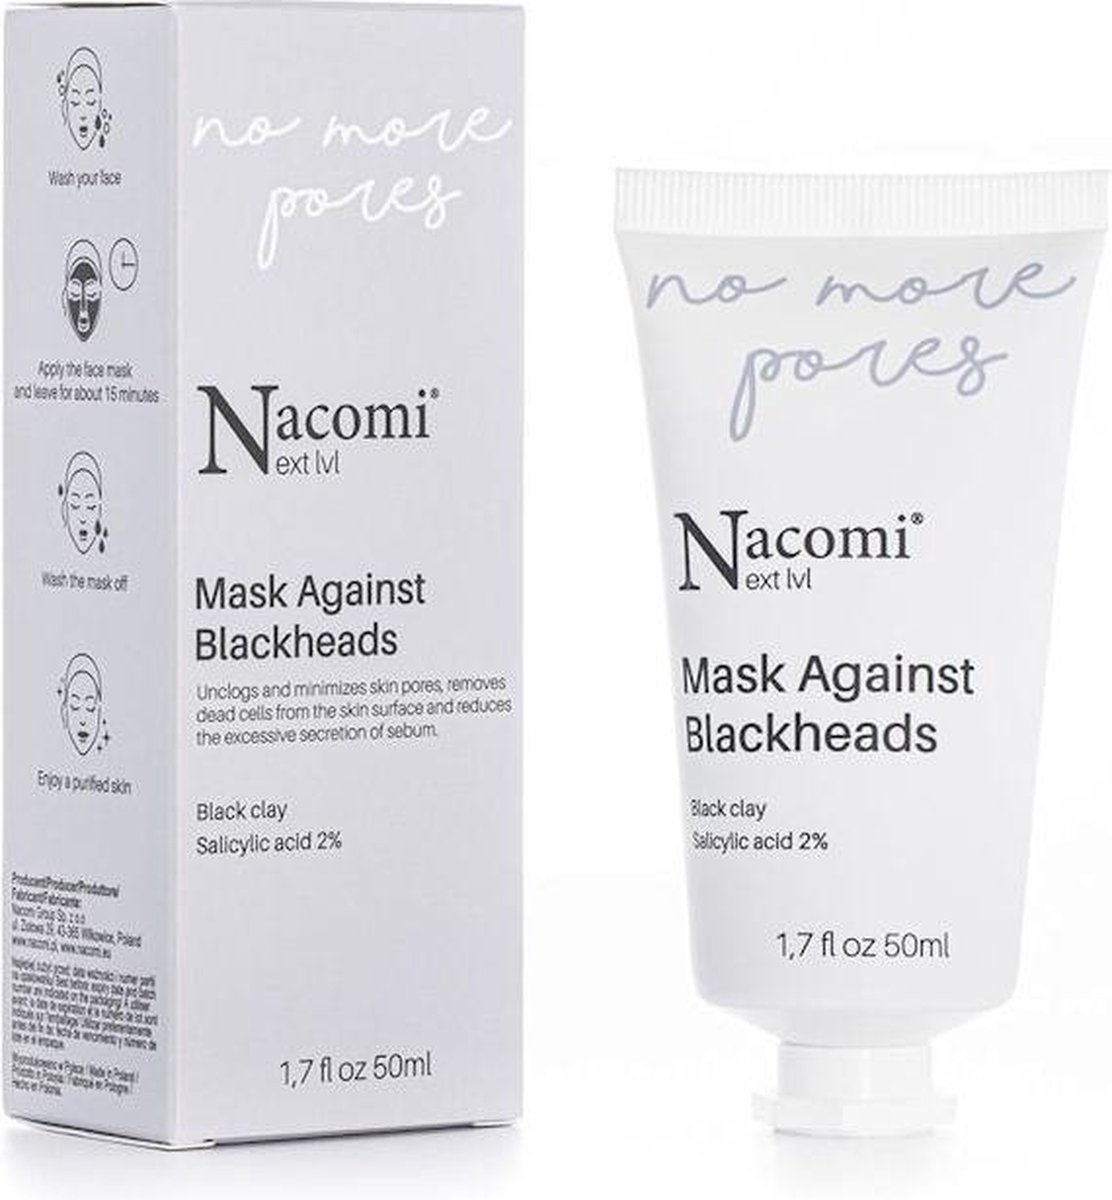 Nacomi Mask Against Blackheads No More Pores 50ml.